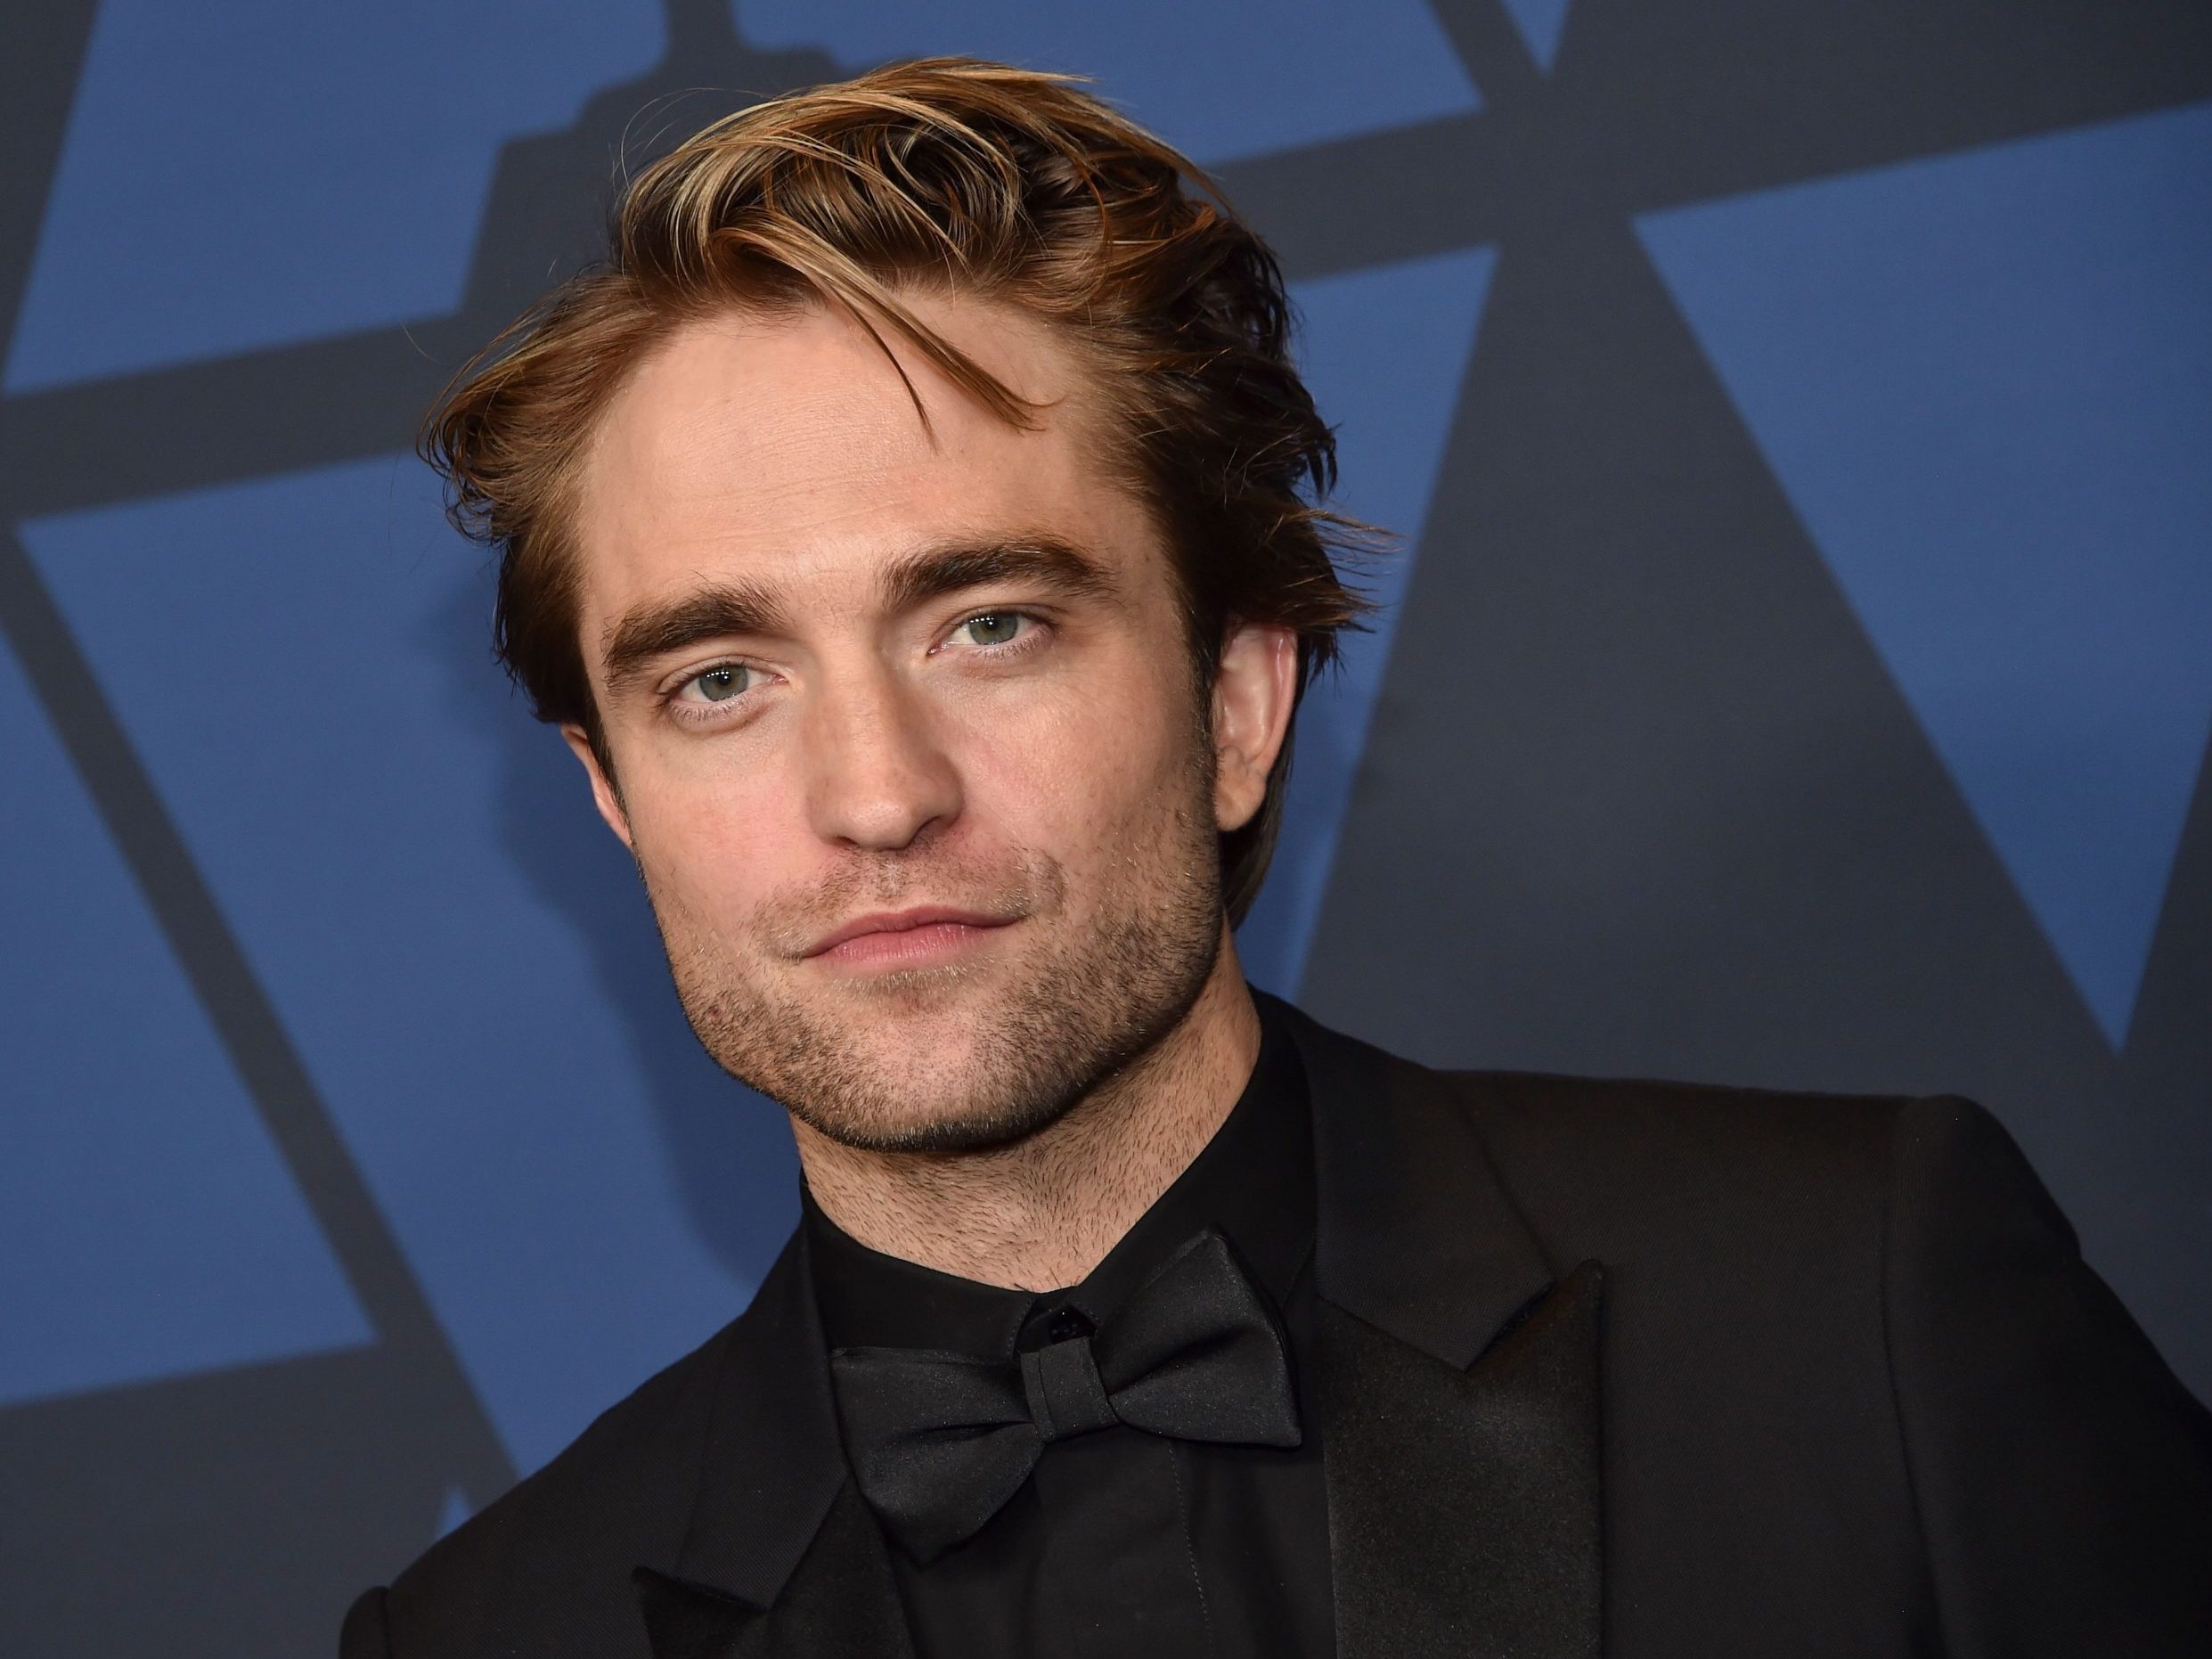 Robert Pattinson 'The Batman' opening shot is 'so jarring' Toronto Sun